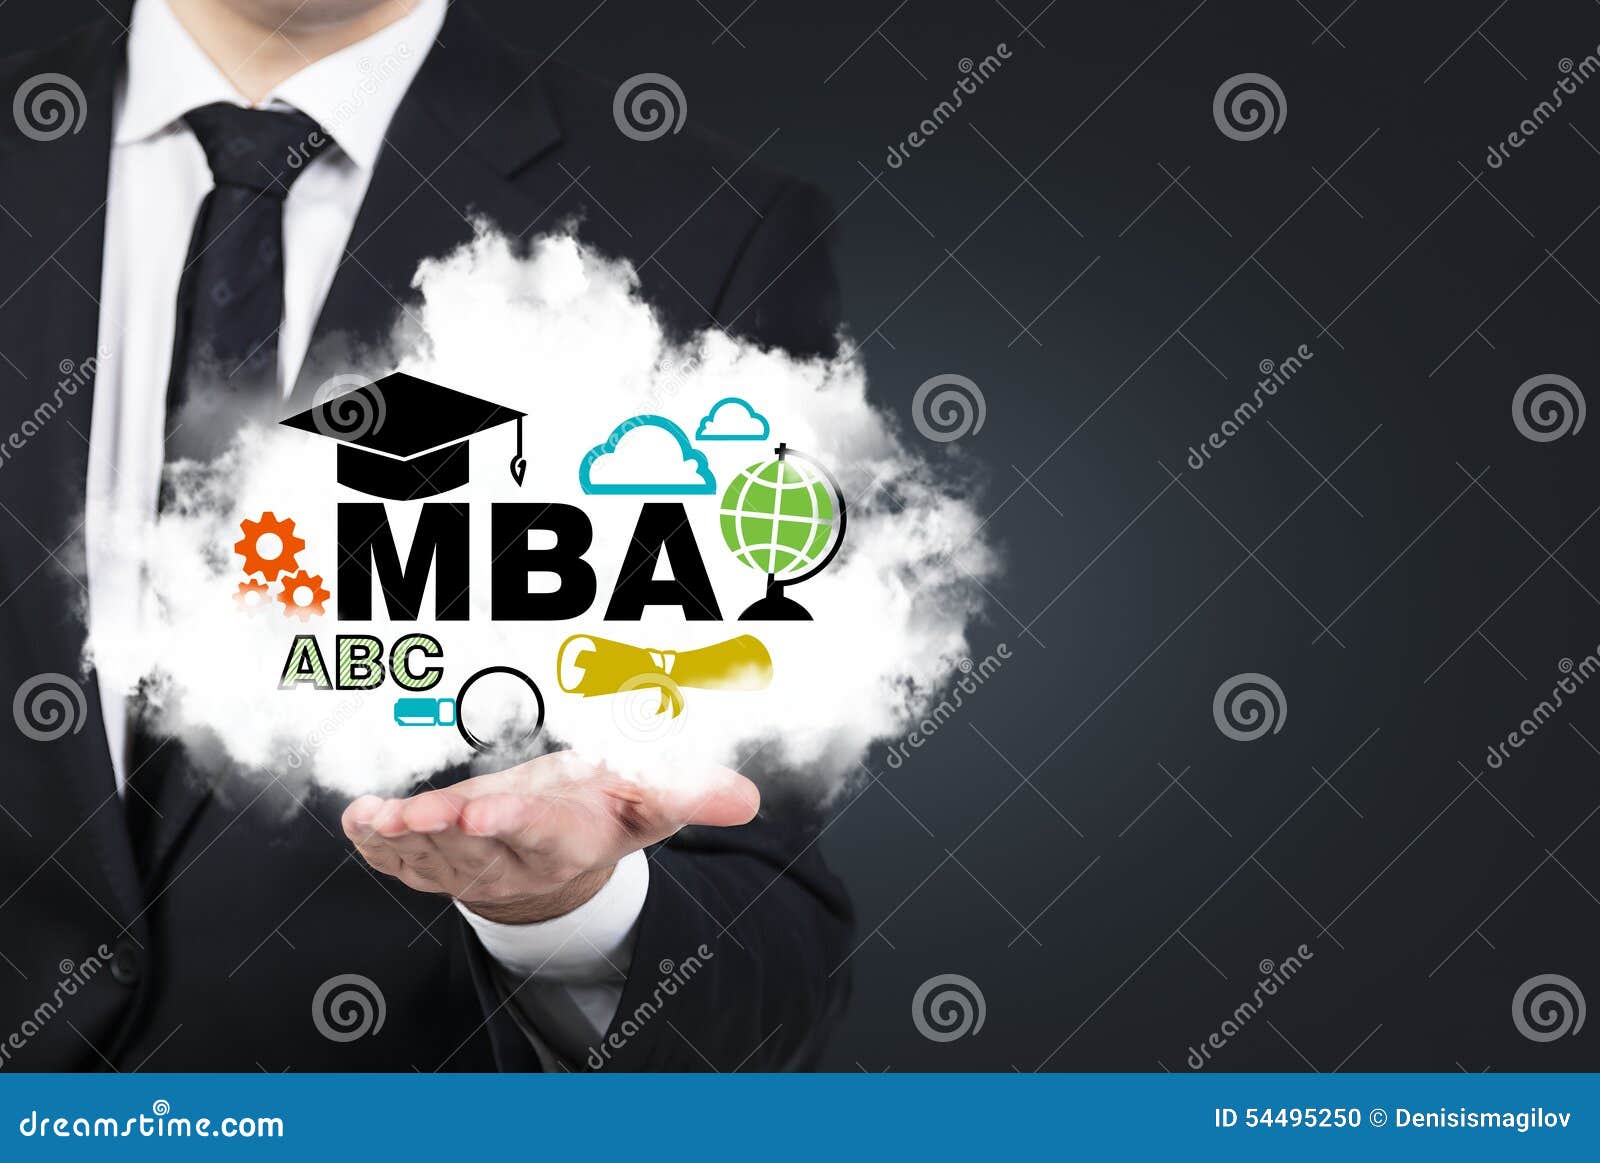 Обучение мба. Бизнес-образование MBA. Курсы MBA. МВА. Mini MBA.